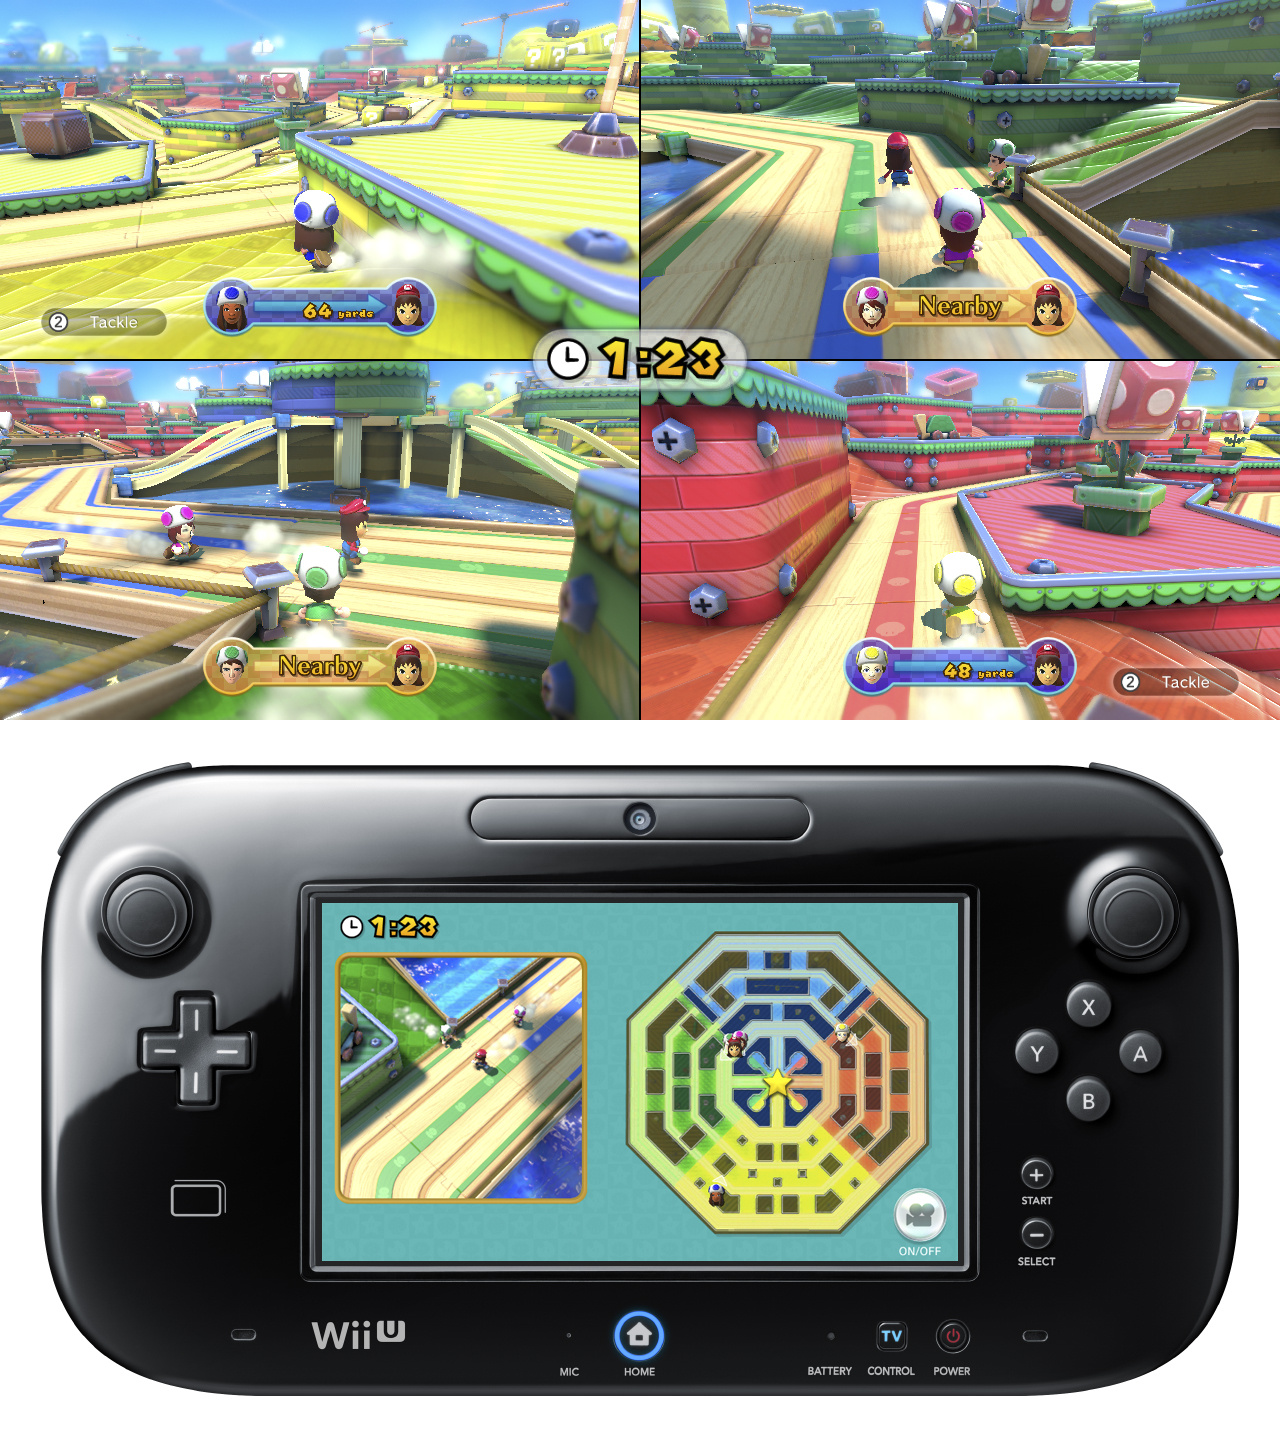 Nintendo Land (Nintendo Selects) for Wii U